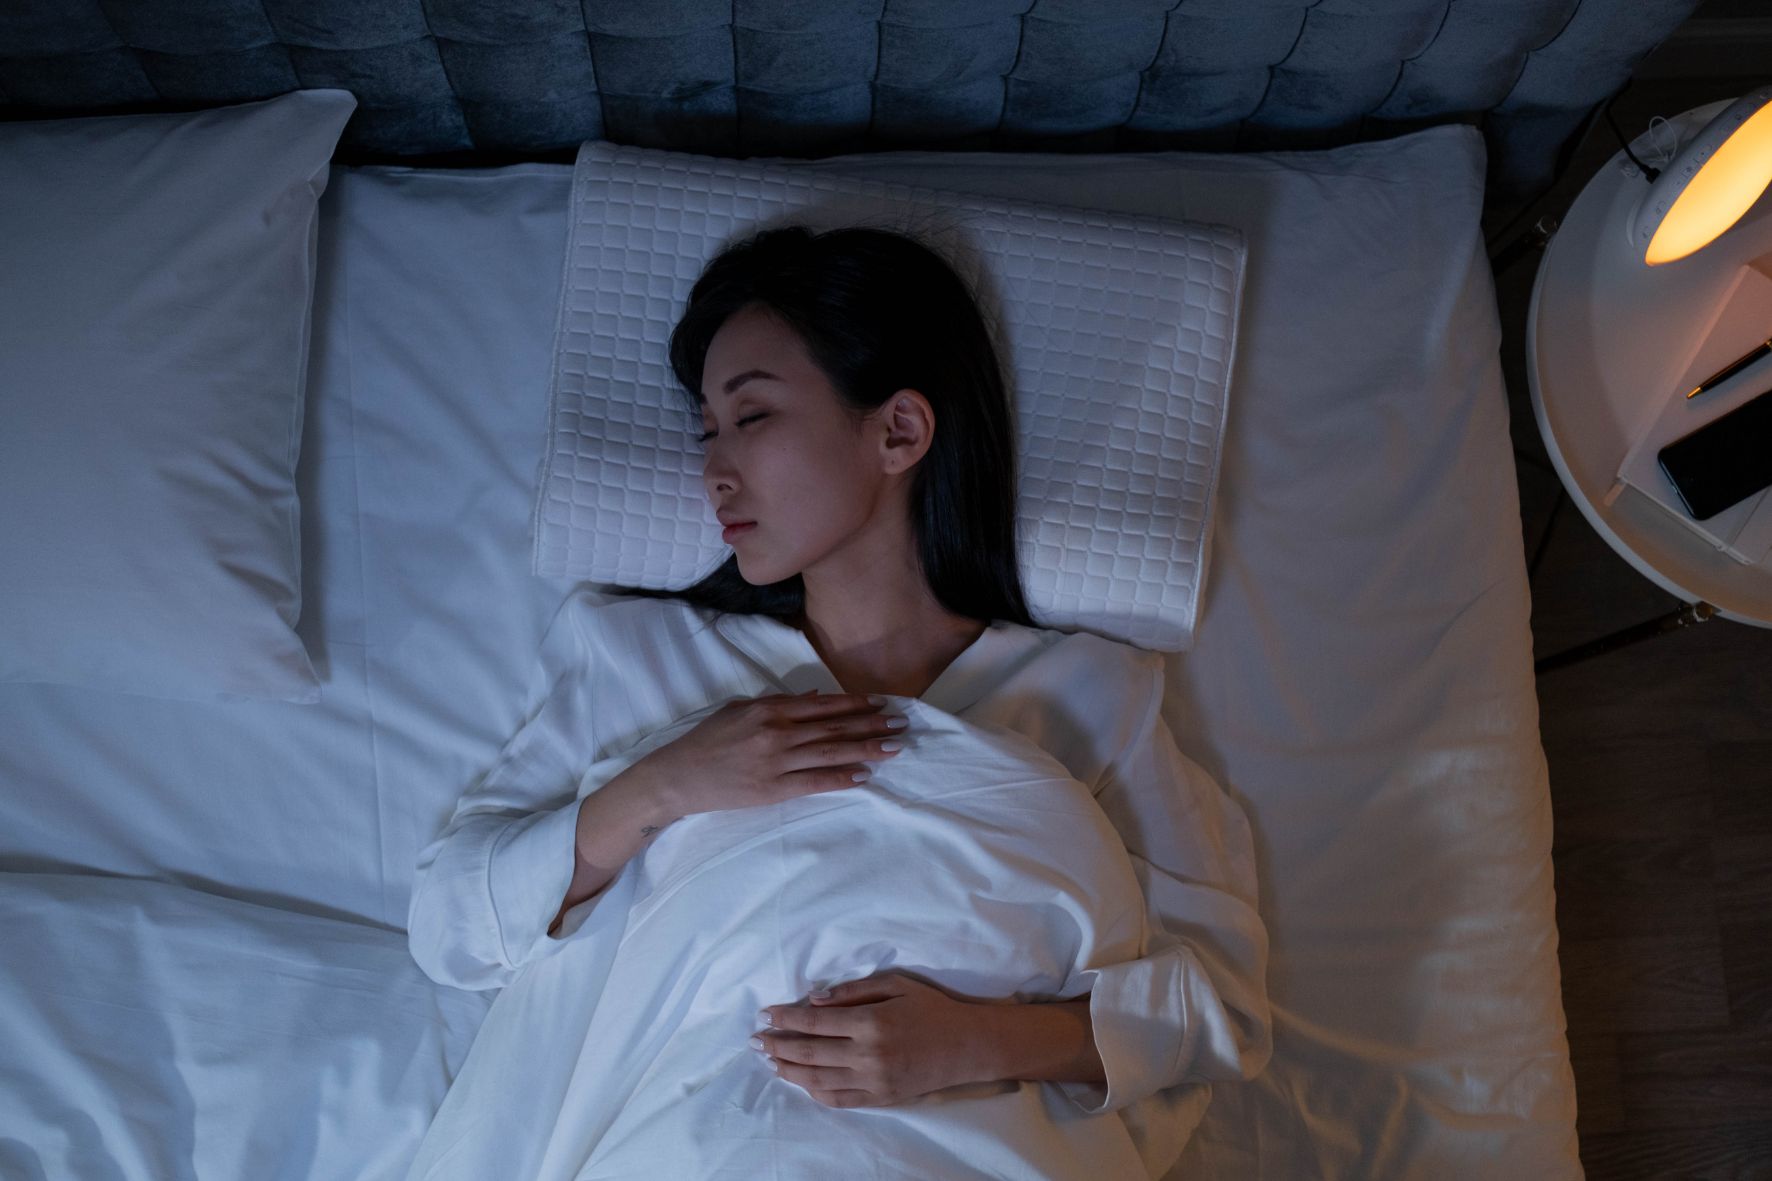 Jangan Anggap Sepele! 5 Bahaya Tidur Pakai Kipas Angin Semalaman, Salah Satunya Bisa Picu Bell’s Palsy